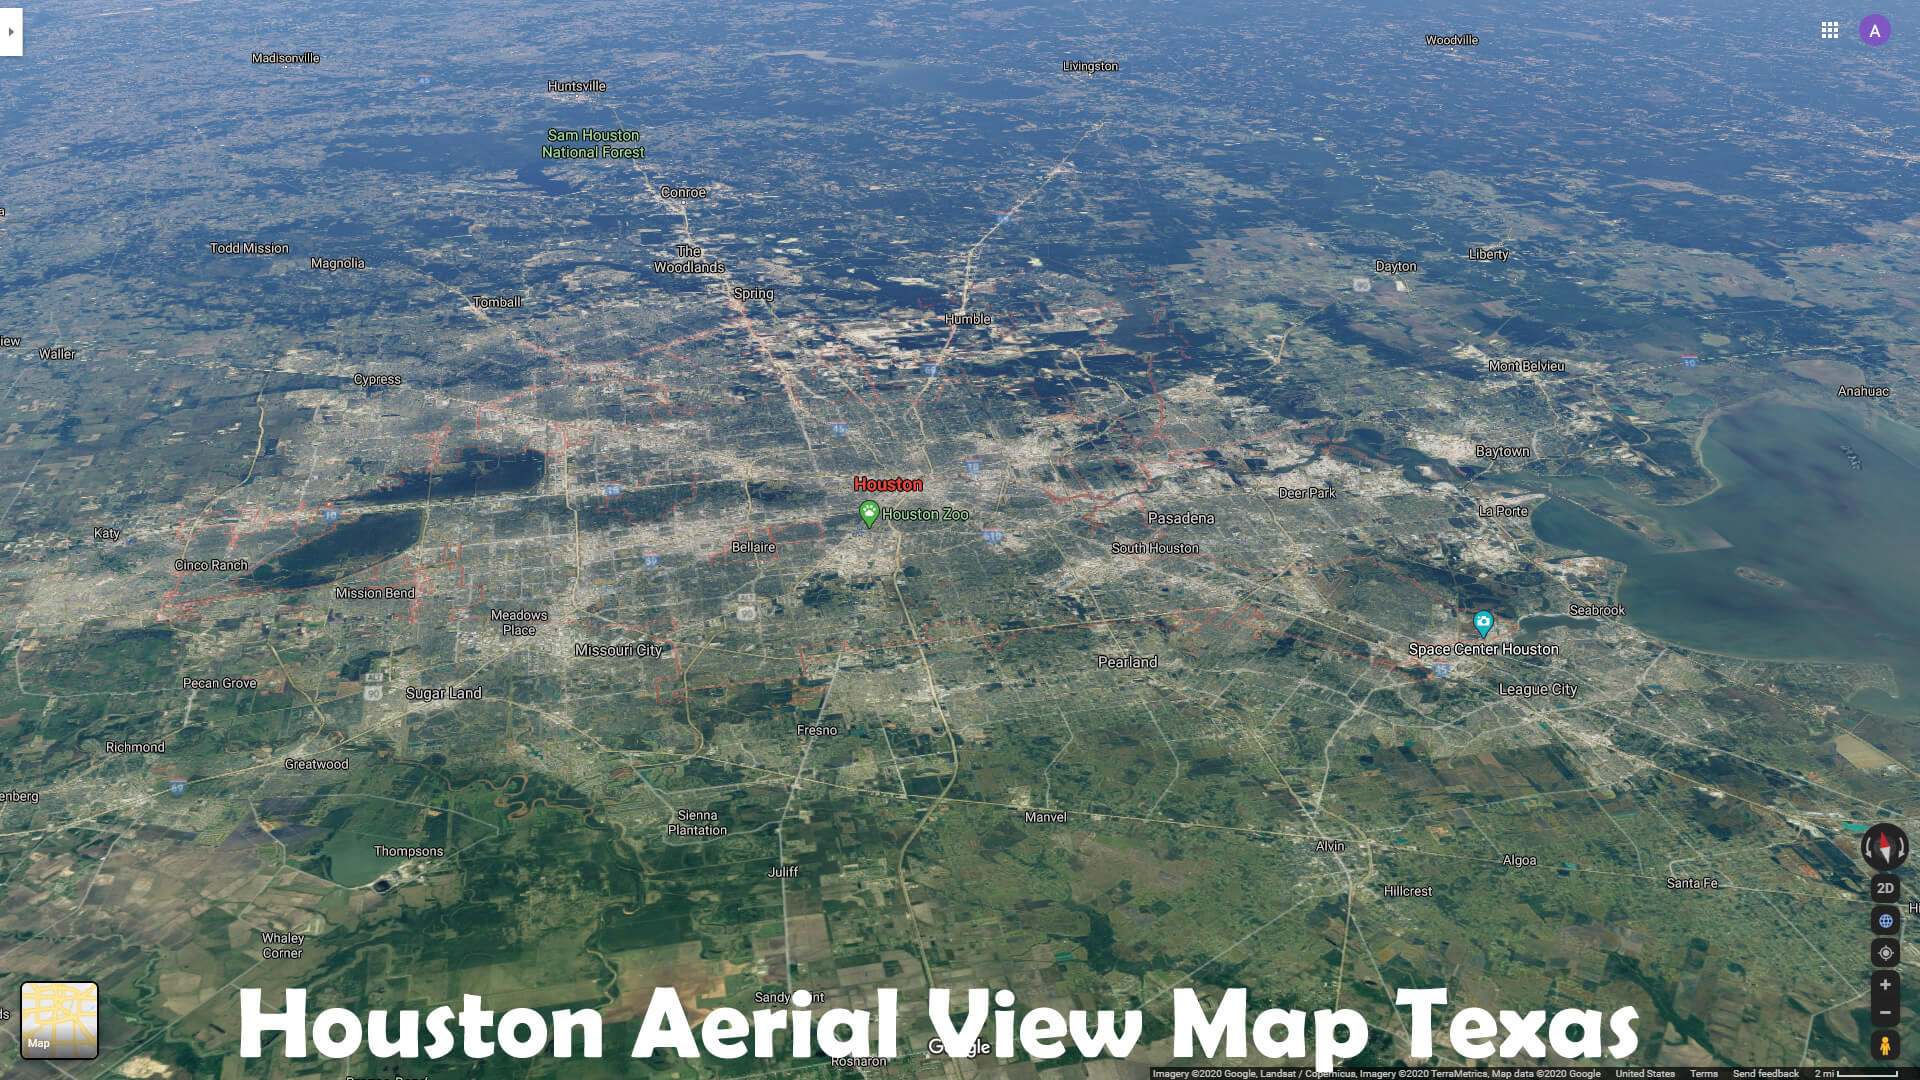 Houston Aerial View Map Texas